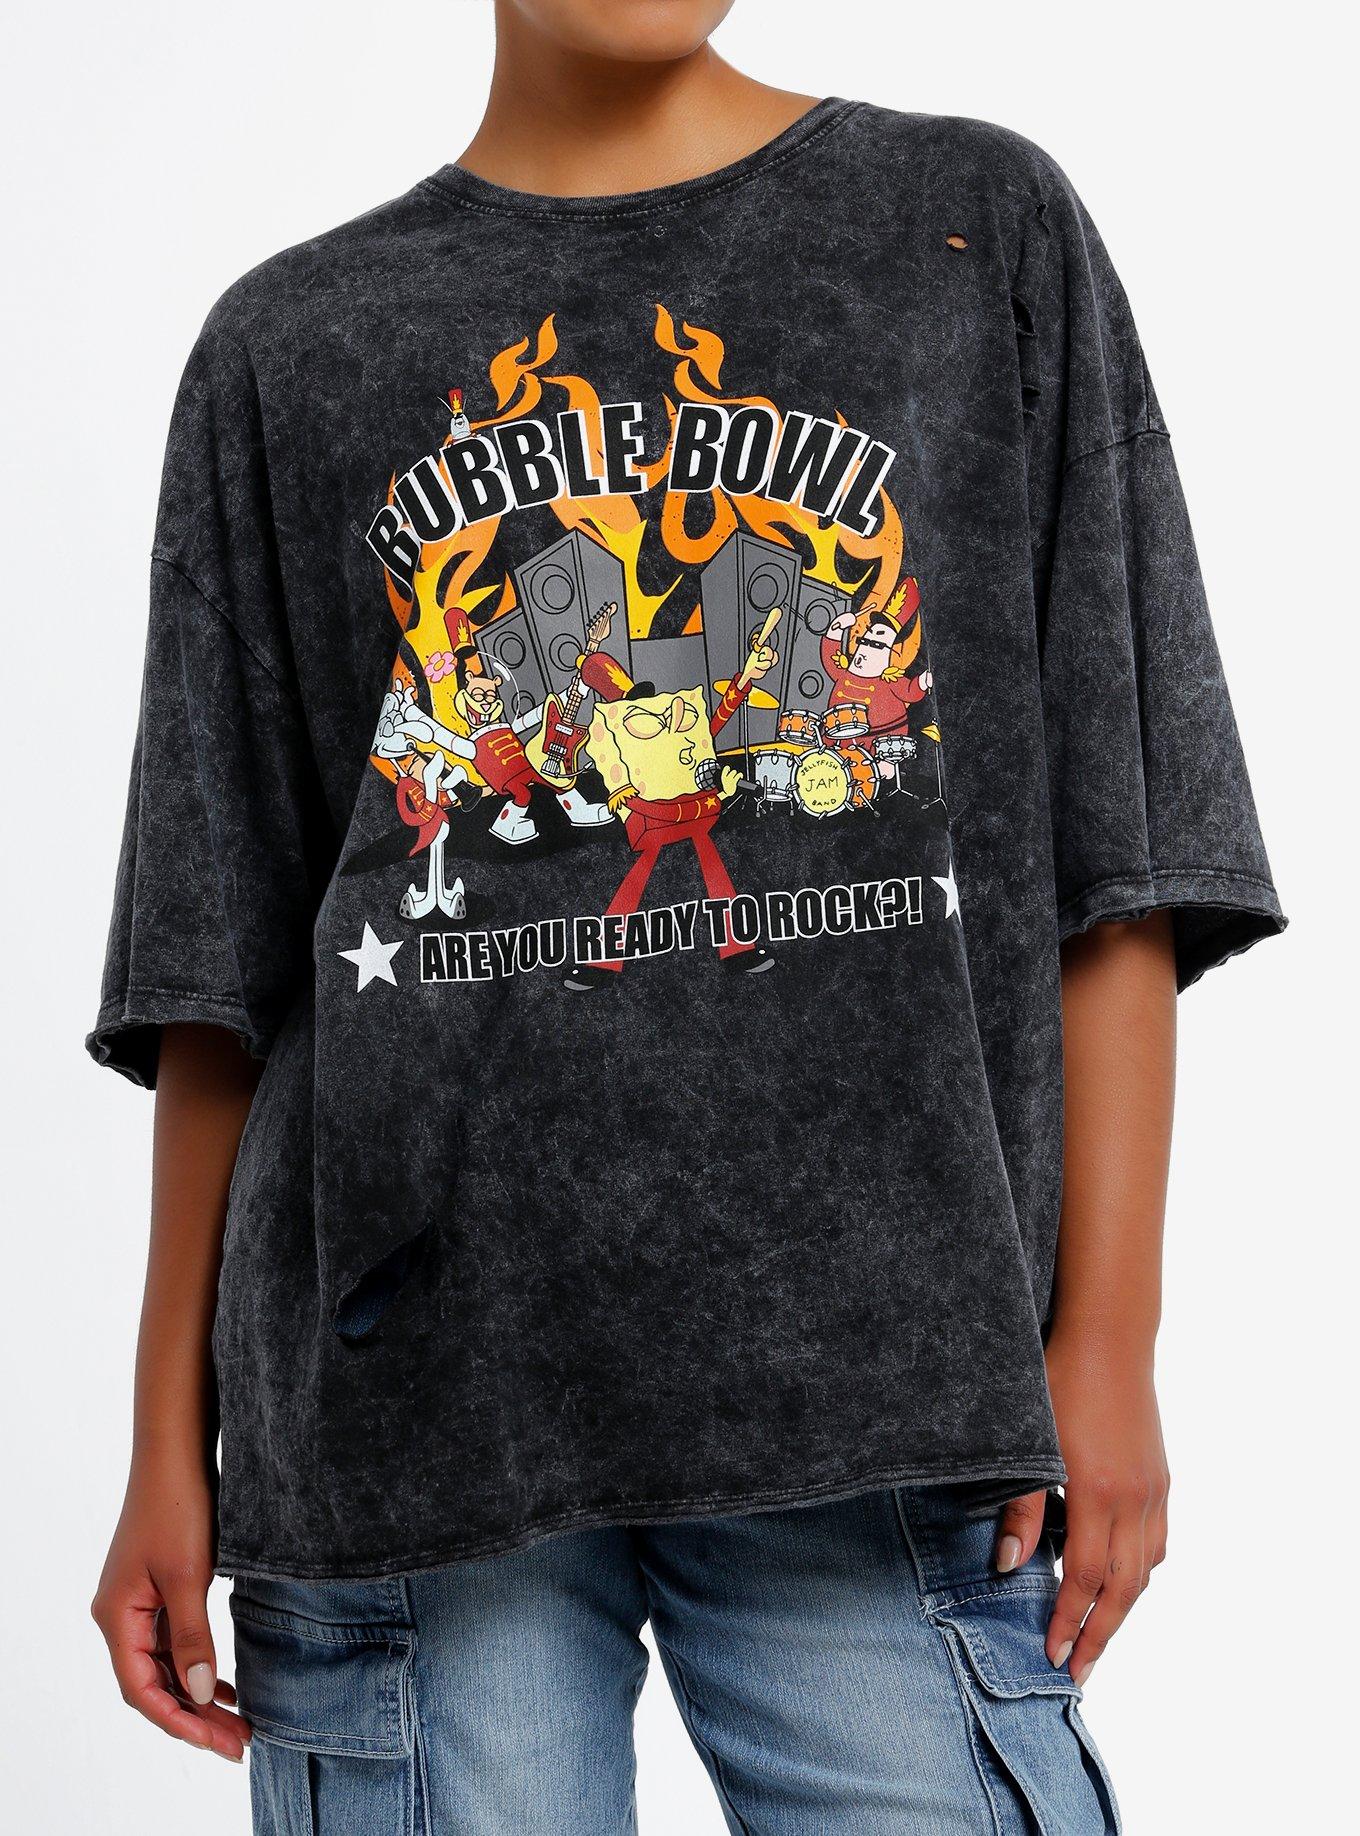 SpongeBob SquarePants Bubble Bowl Dark Wash Girls Oversized T-Shirt